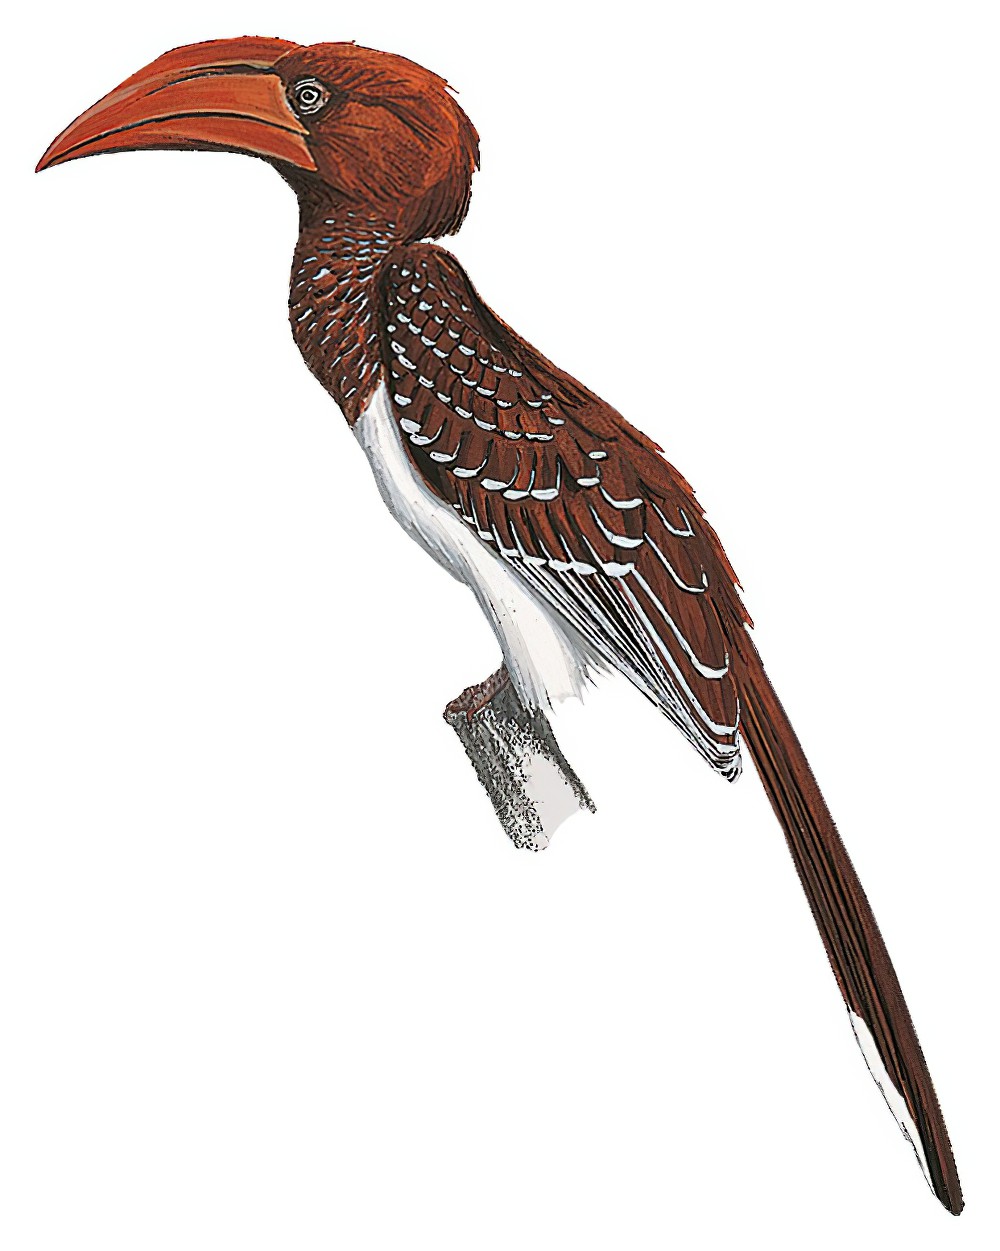 Red-billed Dwarf Hornbill / Lophoceros camurus